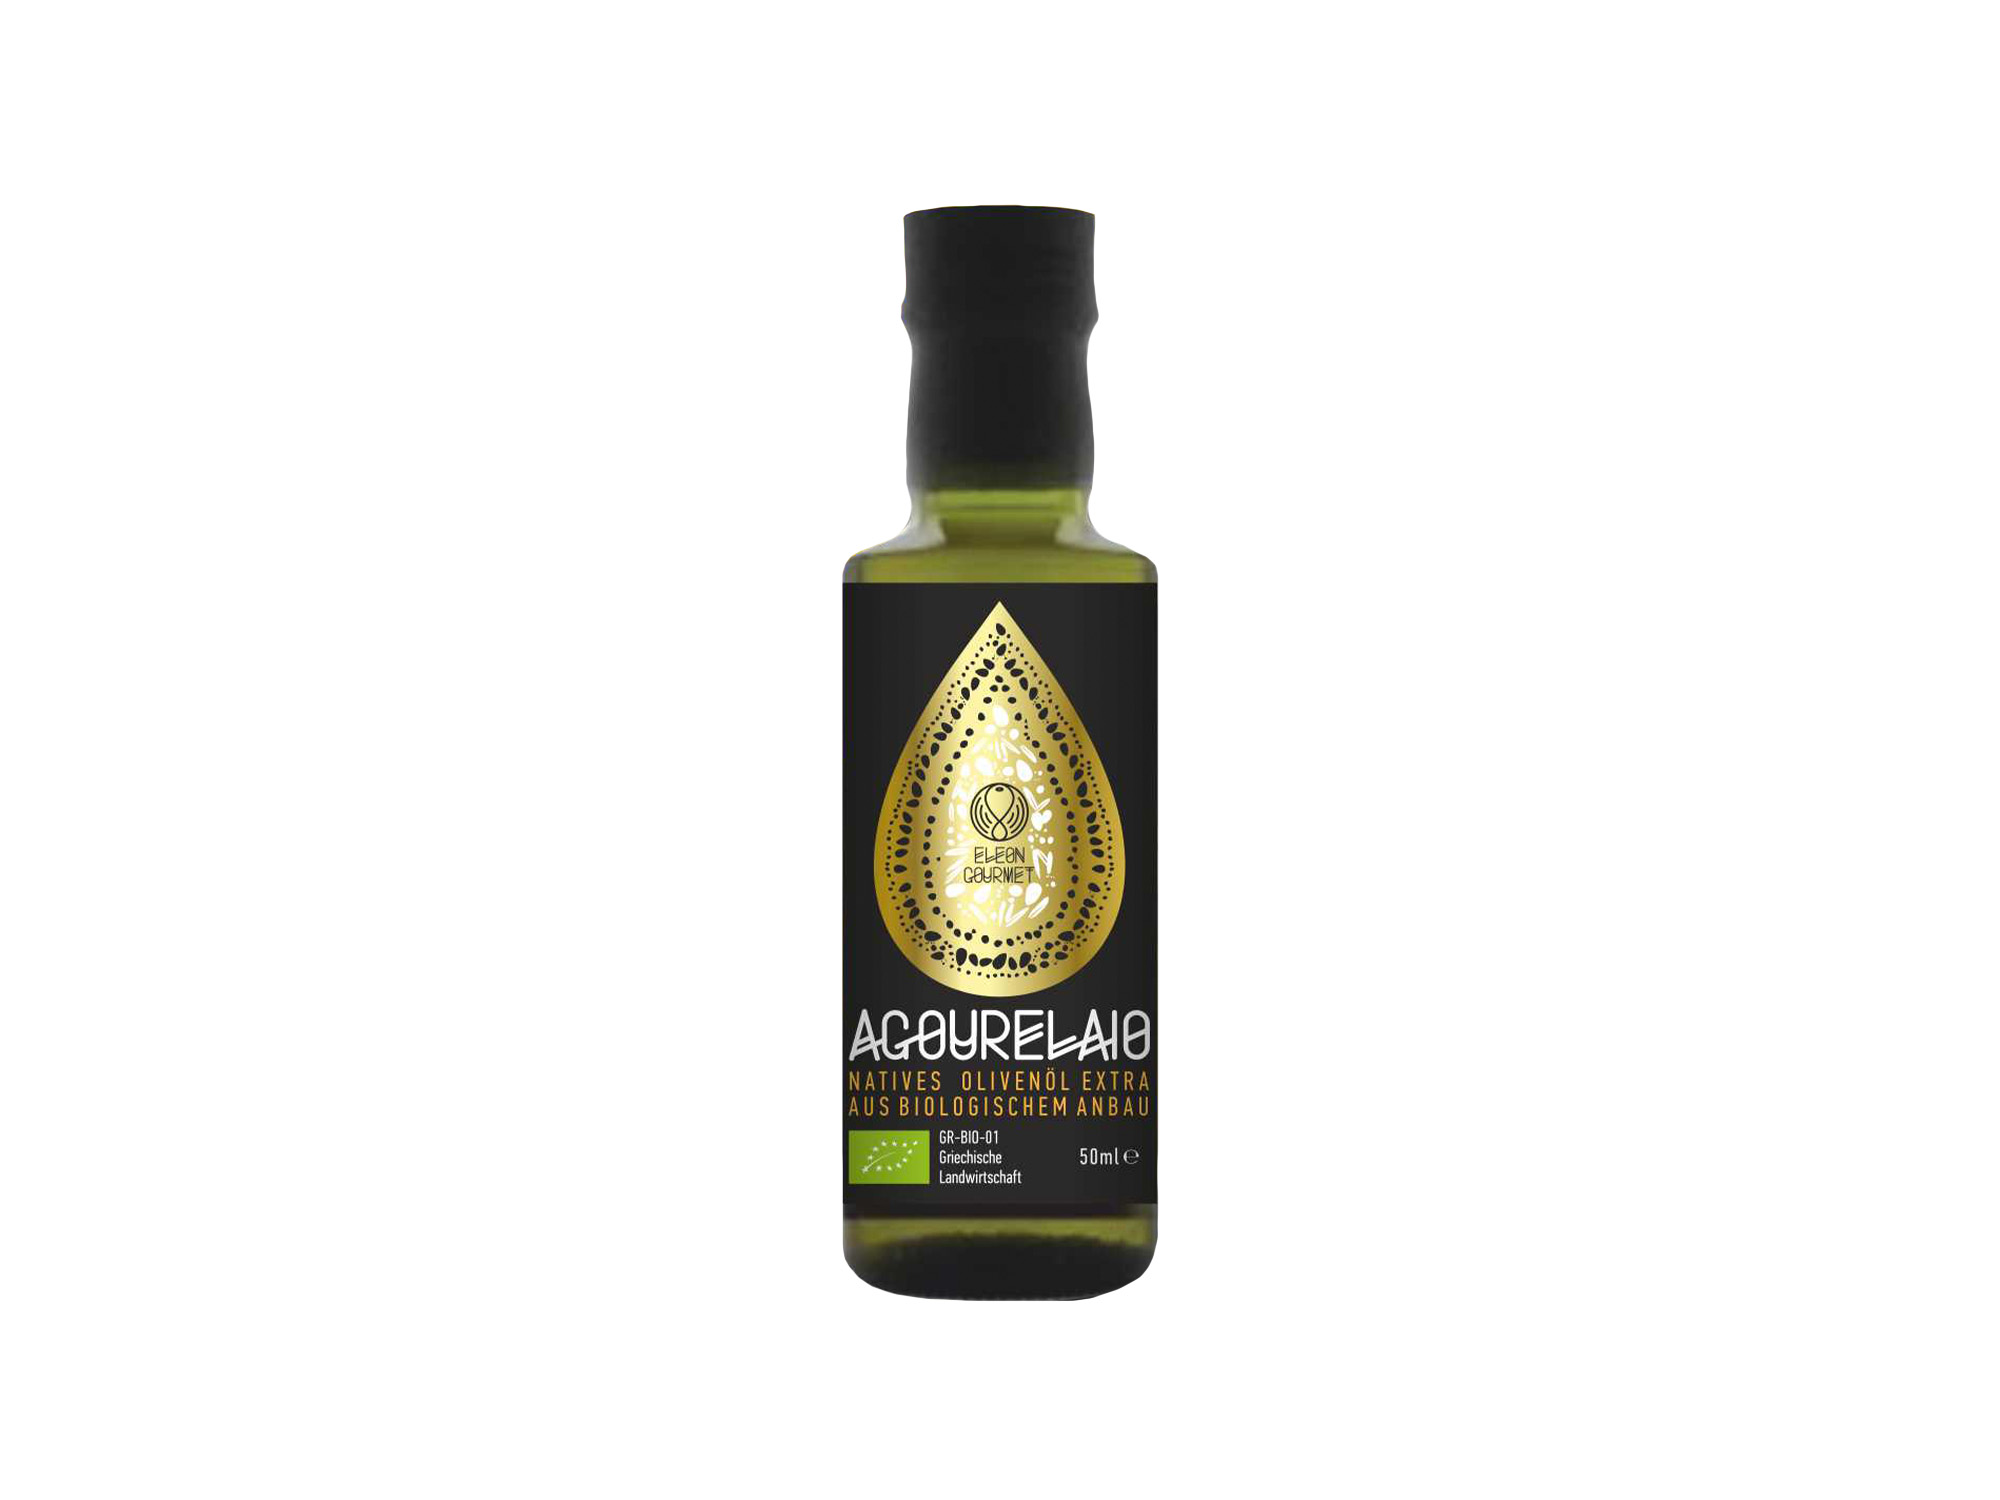 Bio Agourelaio Natives Olivenöl extra aus unreifen Oliven 50 ml